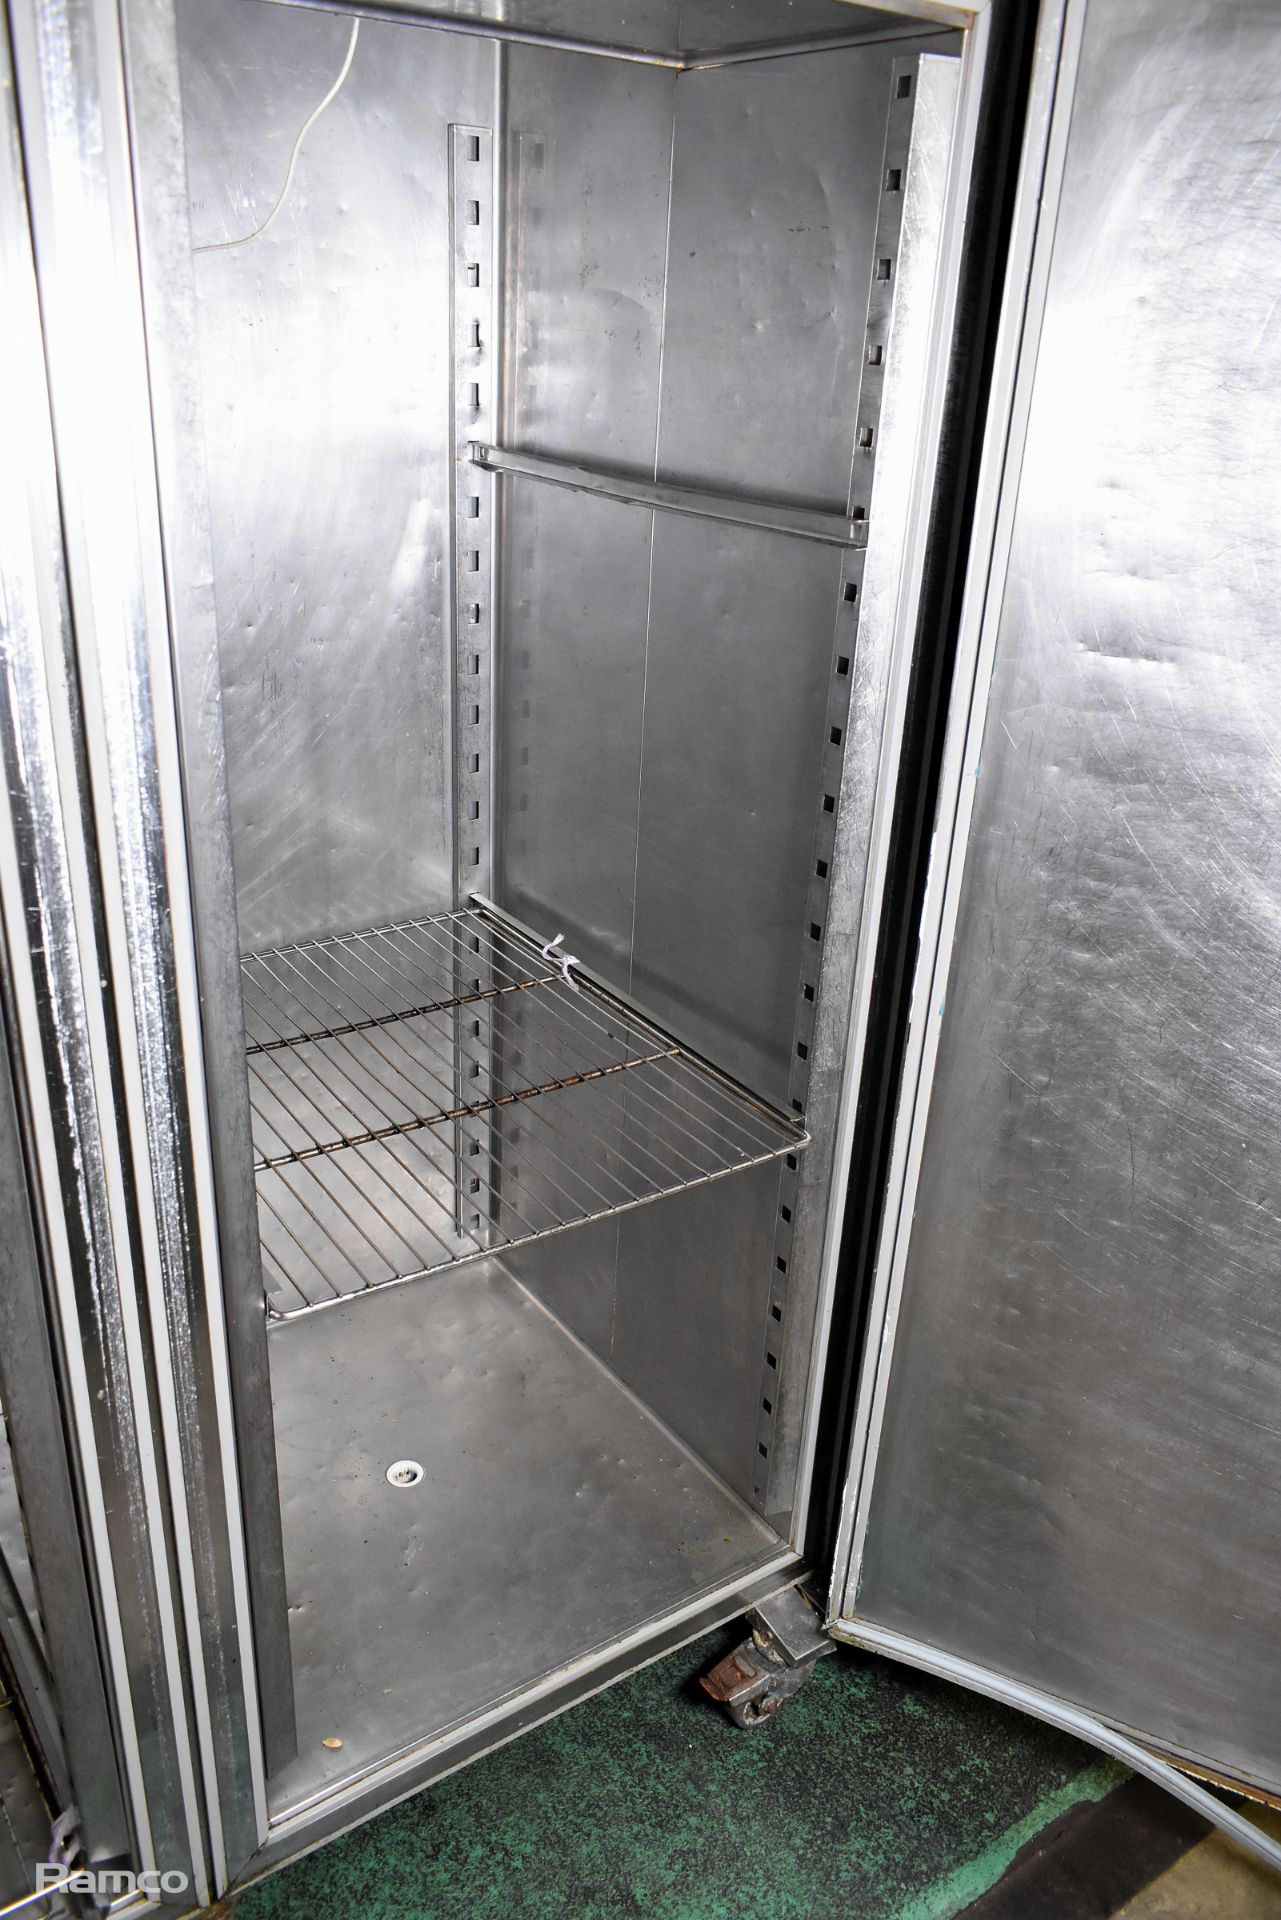 Friulinox AR14/2 stainless steel double door upright fridge - W 1440 x D 800 x H 1980mm - Image 5 of 7